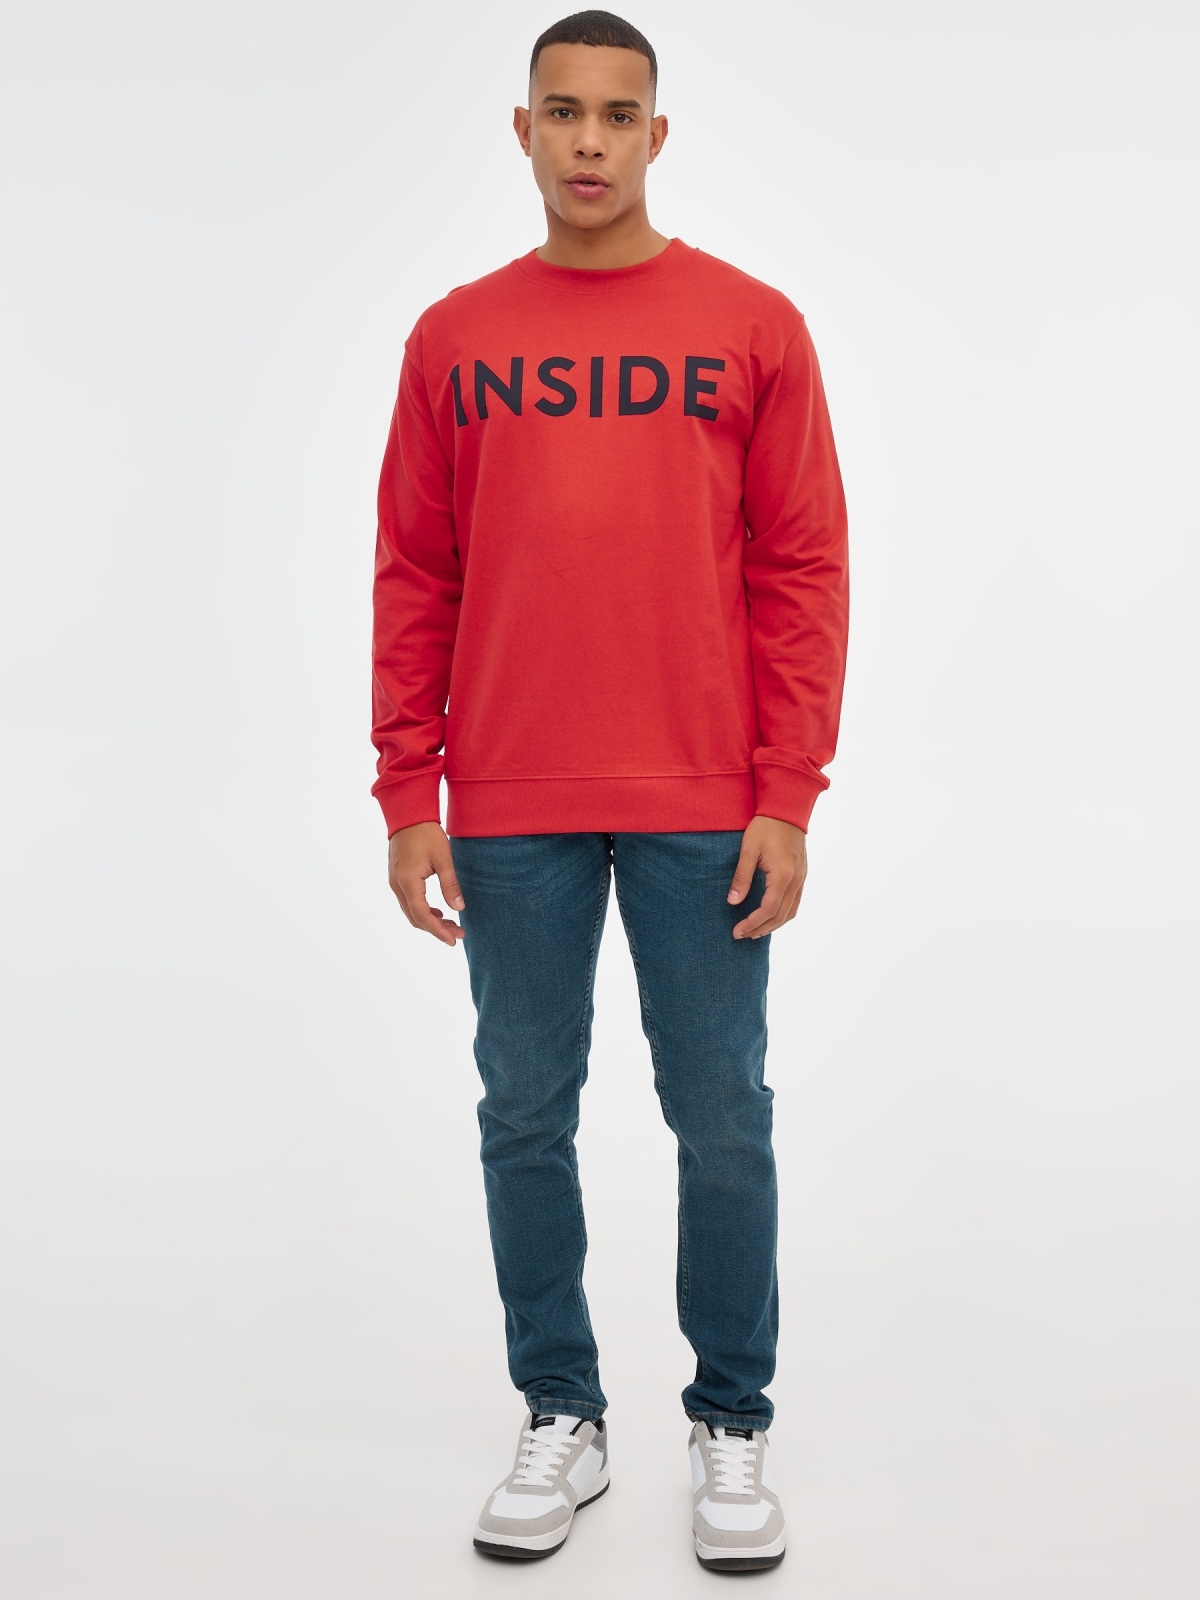 INSIDE hoodless sweatshirt red front view